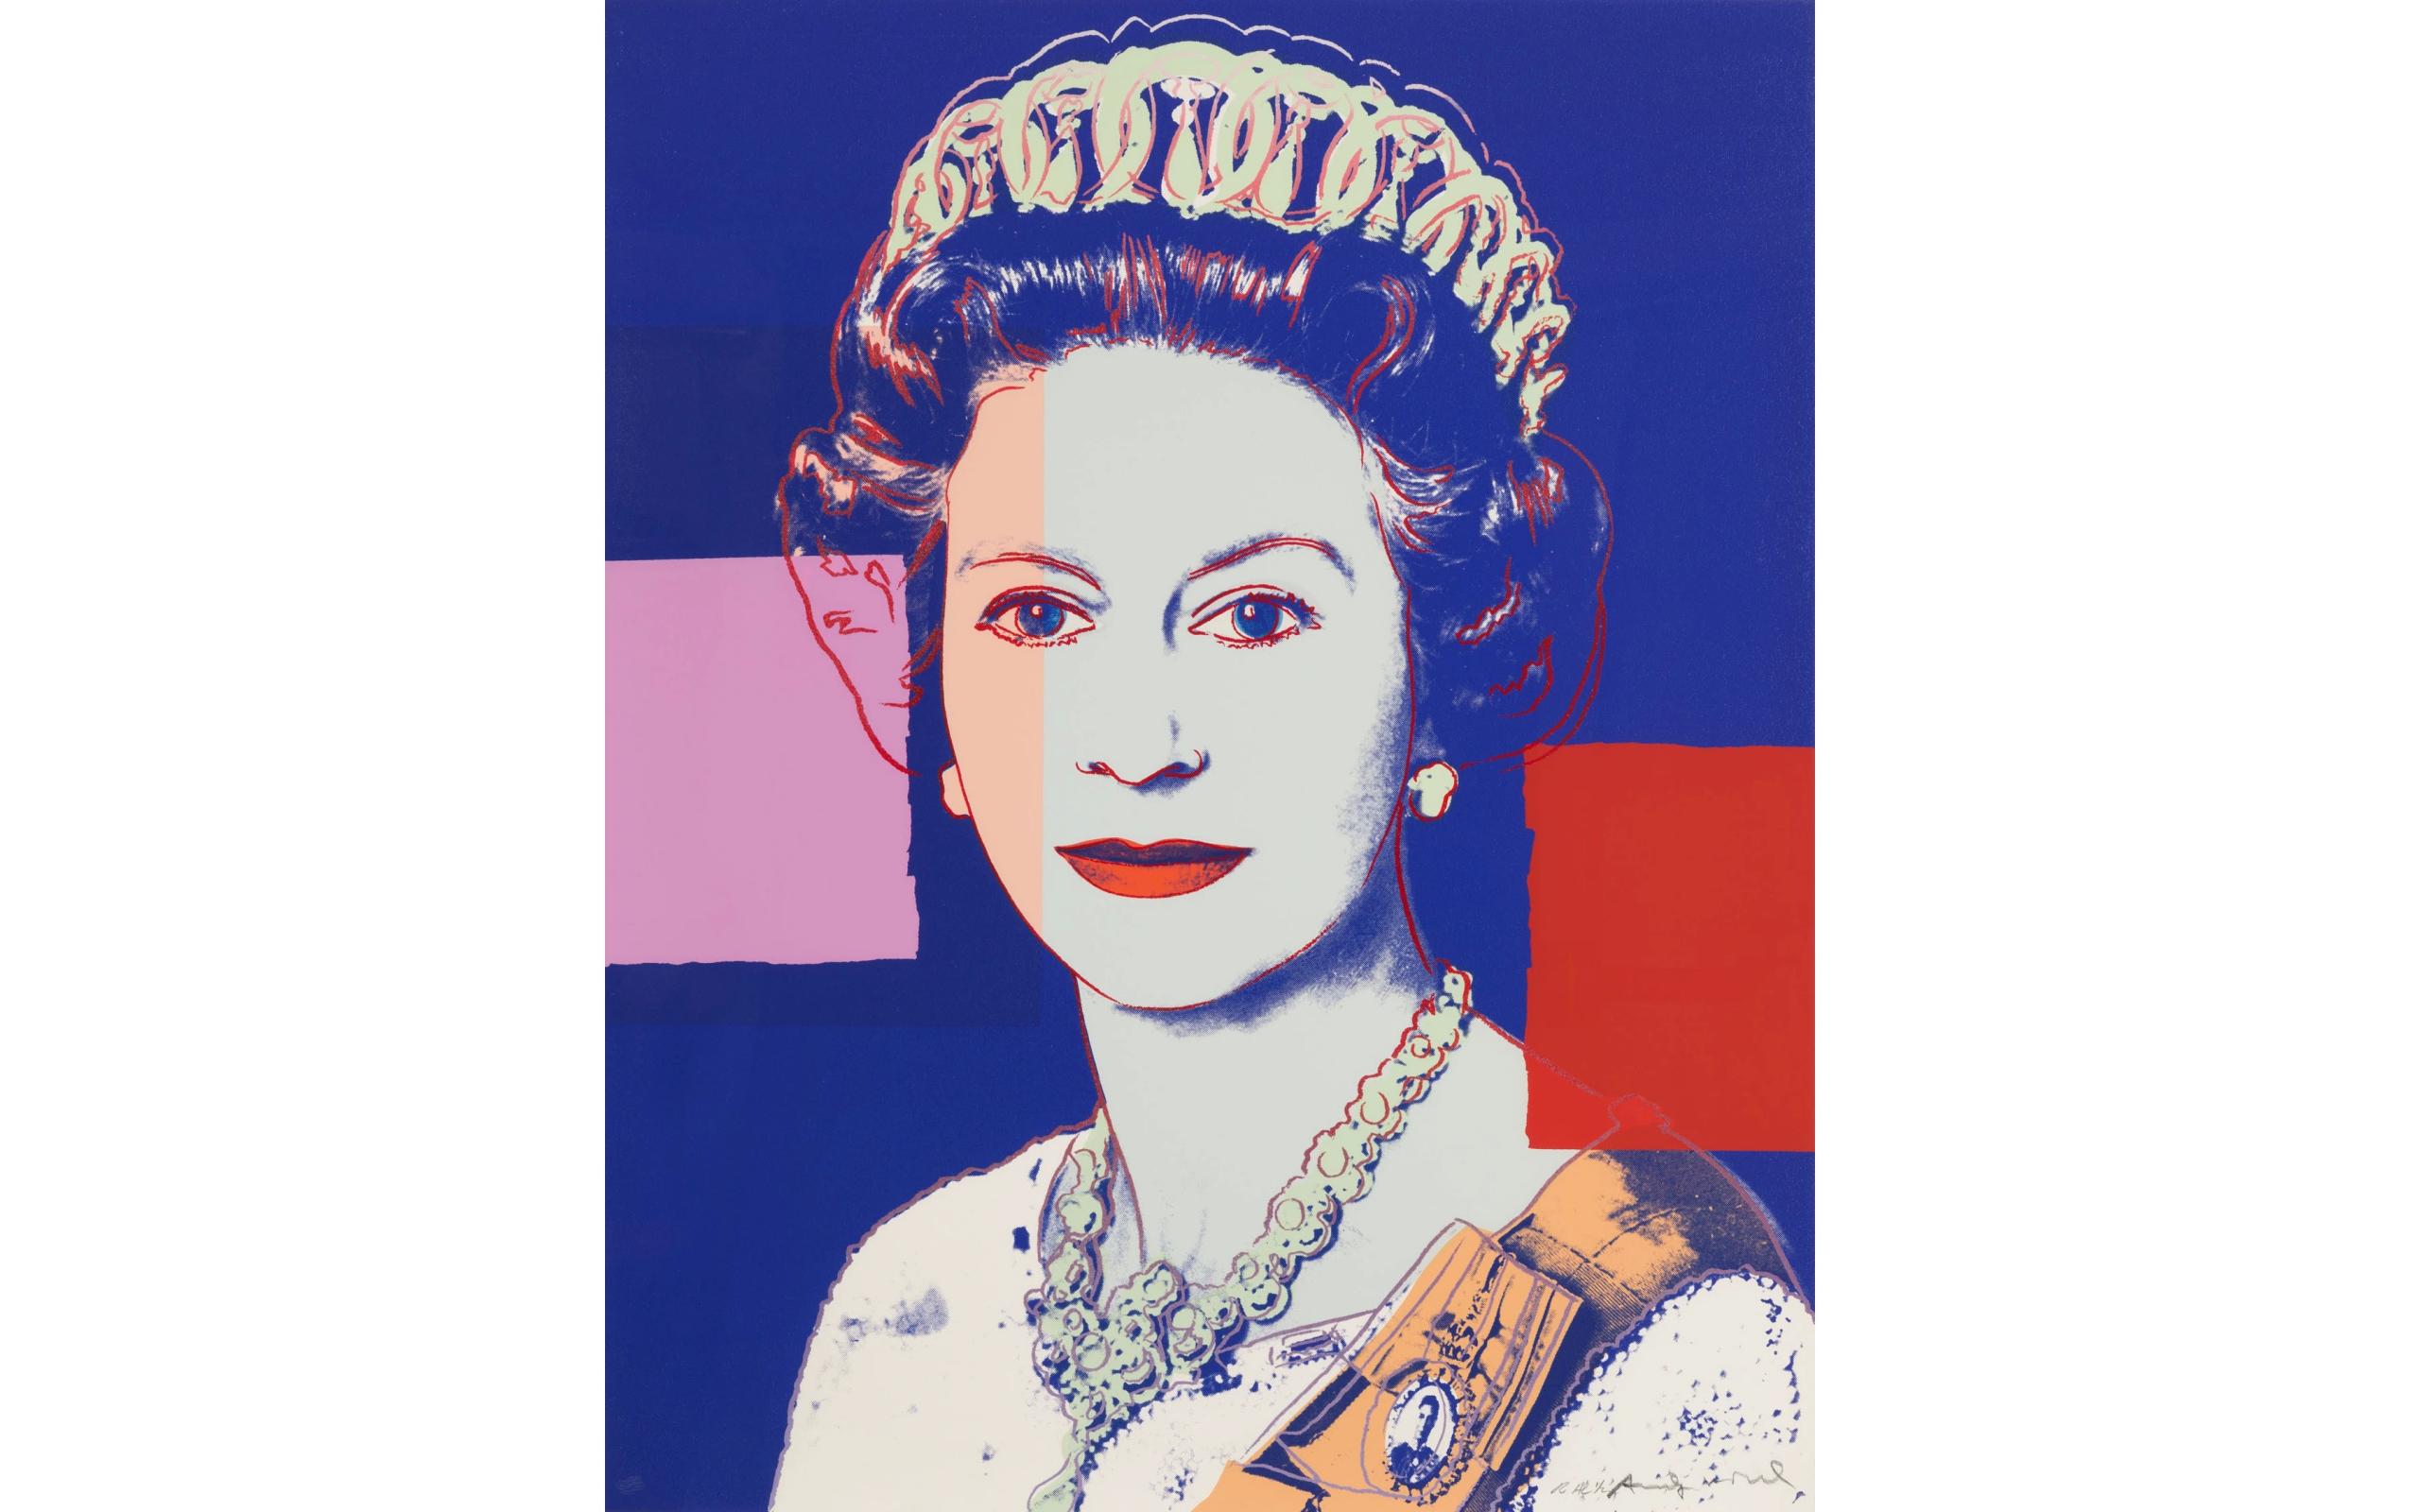 Warhol Print of Queen Elizabeth II Sells for $855,000, Sets AuctionRecord